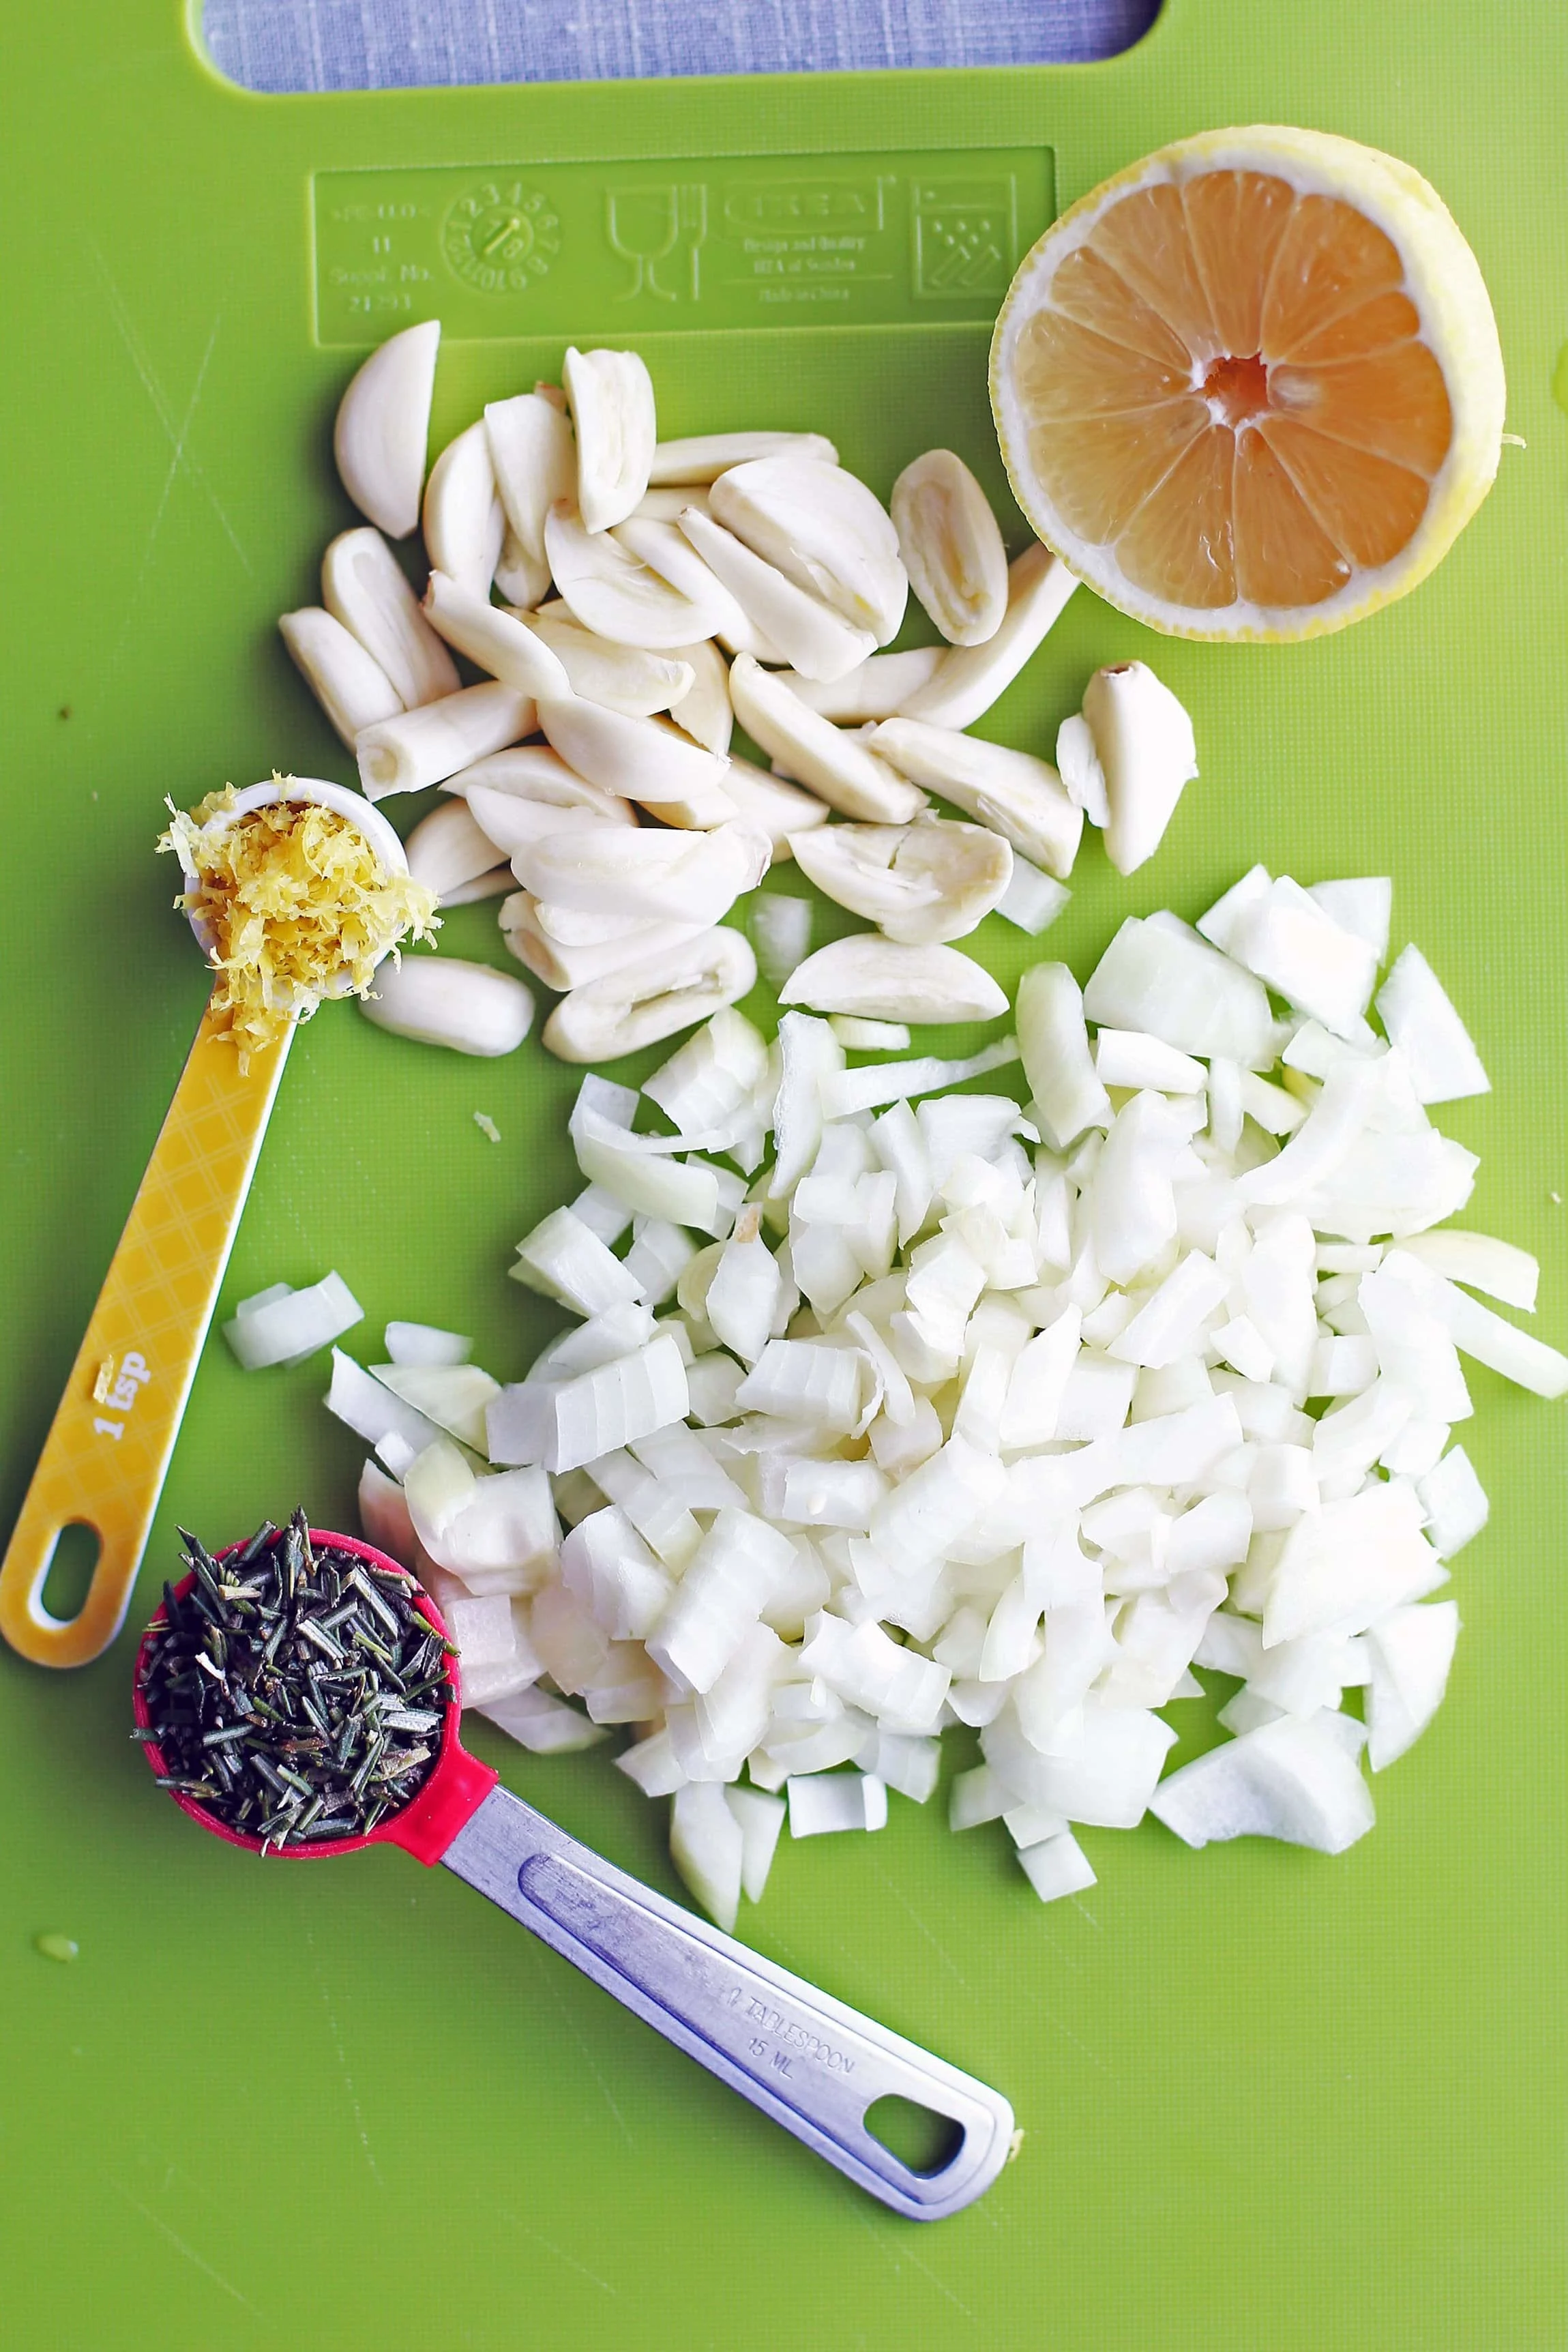 Diced onions, quartered garlic cloves, lemon zest, half lemon, and minced fresh rosemary on a green cutting board.